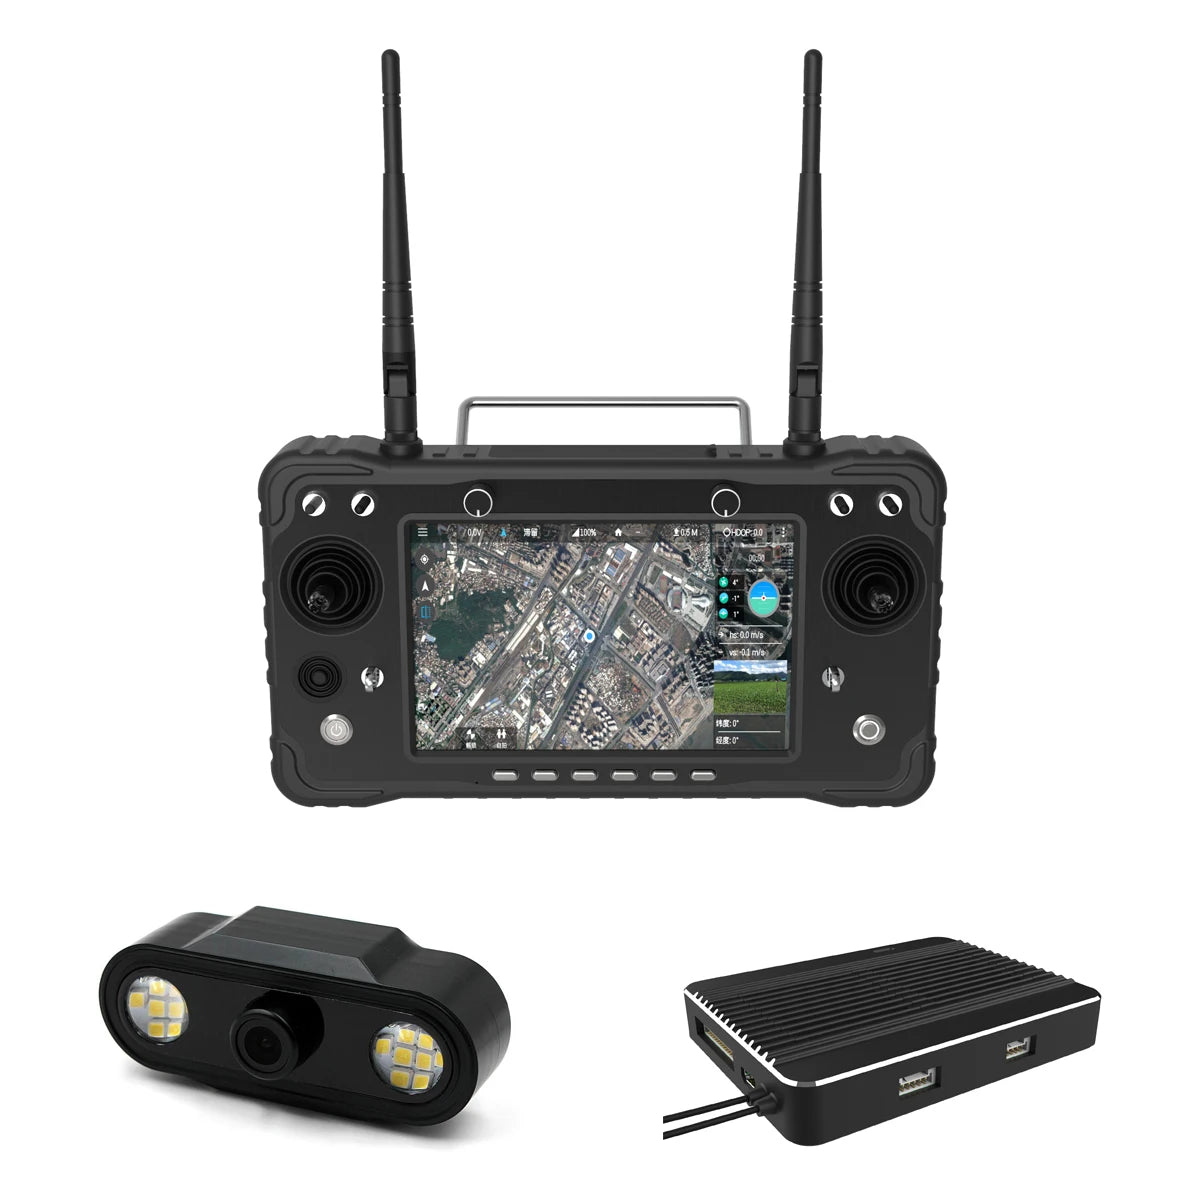 CUAV Black H16 Video Transmission System Remote Controller For RC Drone Parts pi